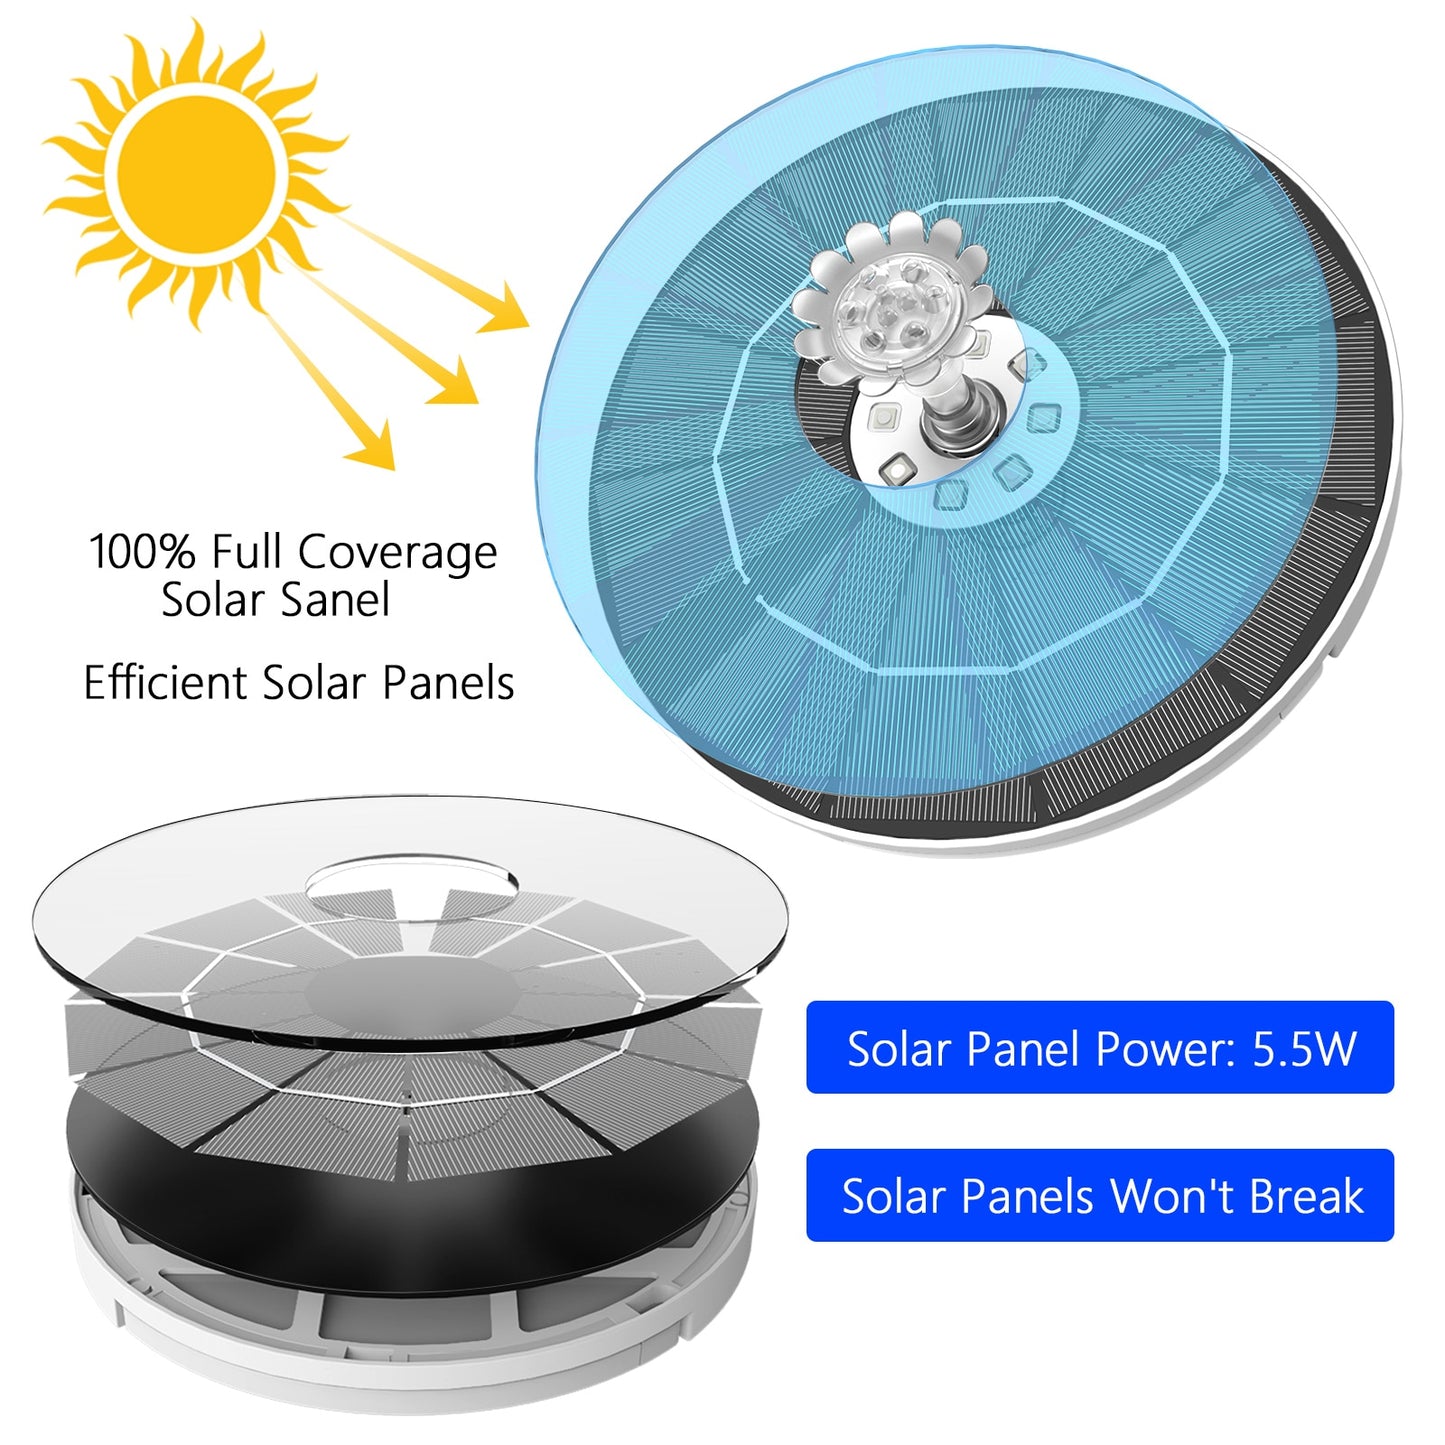 100% Full Coverage Solar Sanel Efficient Solar Panels